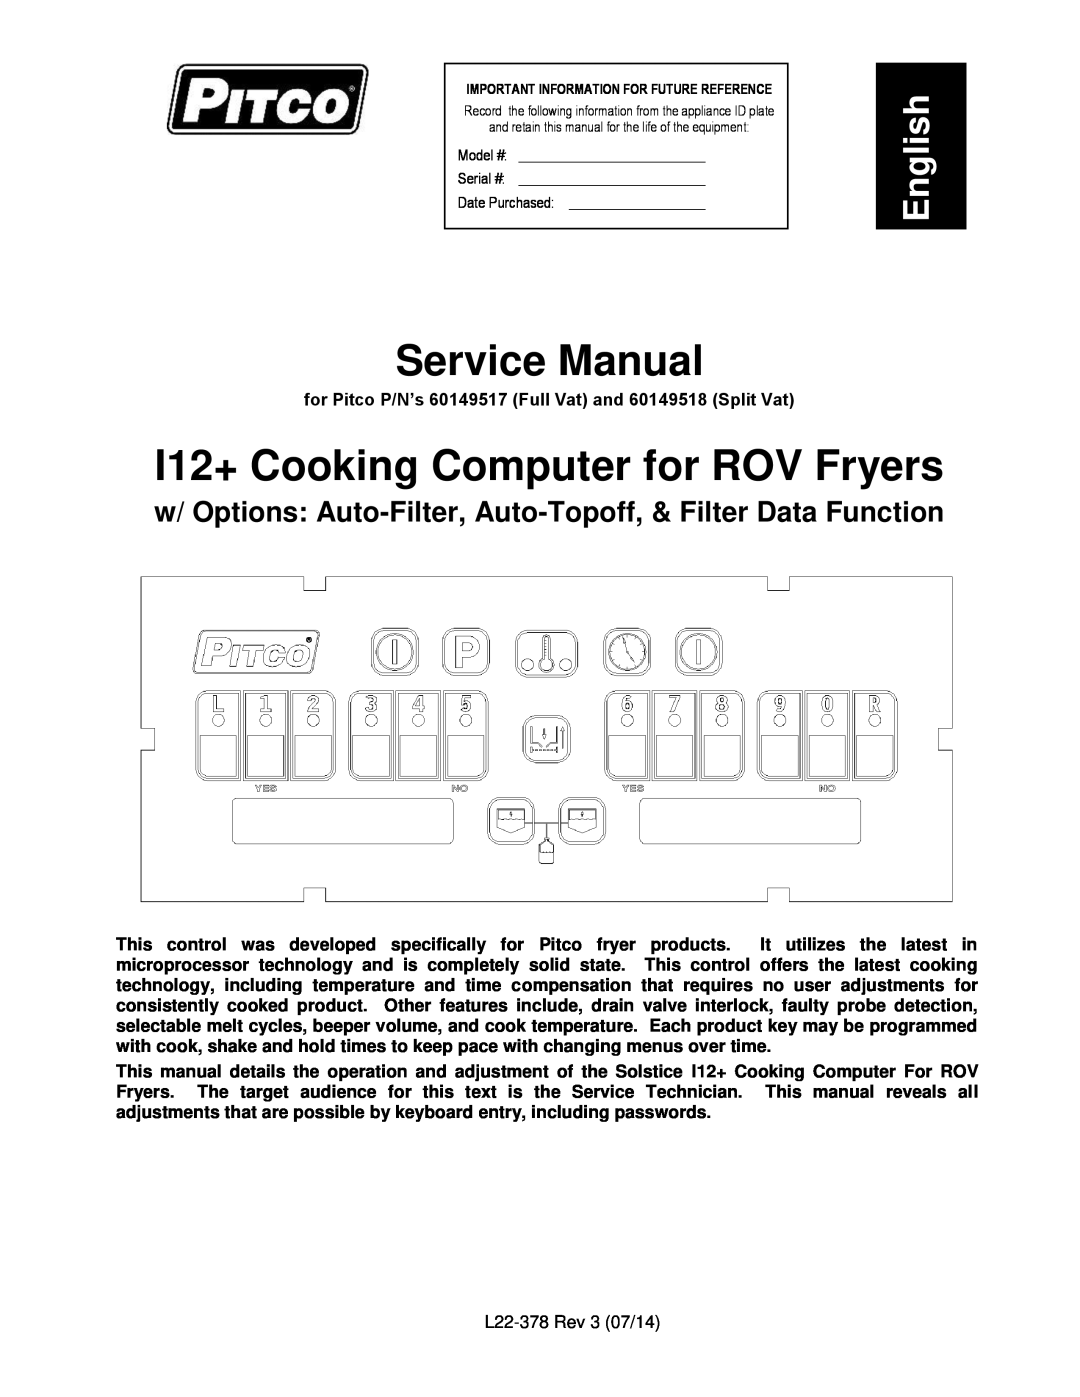 Pitco Frialator manual for Pitco P/N’s 60149517 Full Vat and 60149518 Split Vat, Service Manual, English 